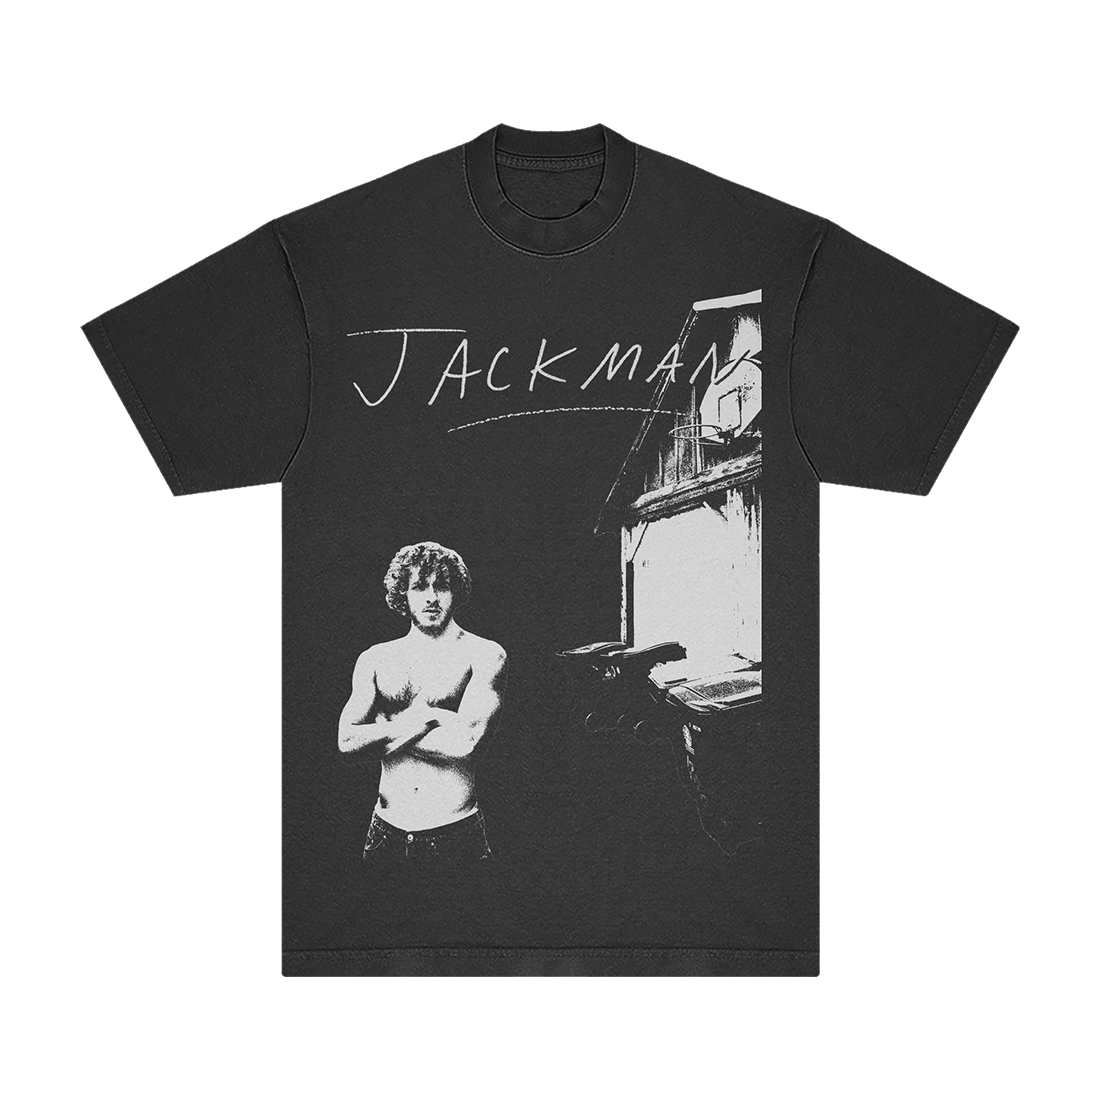 Jackman. Silhouette T-shirt